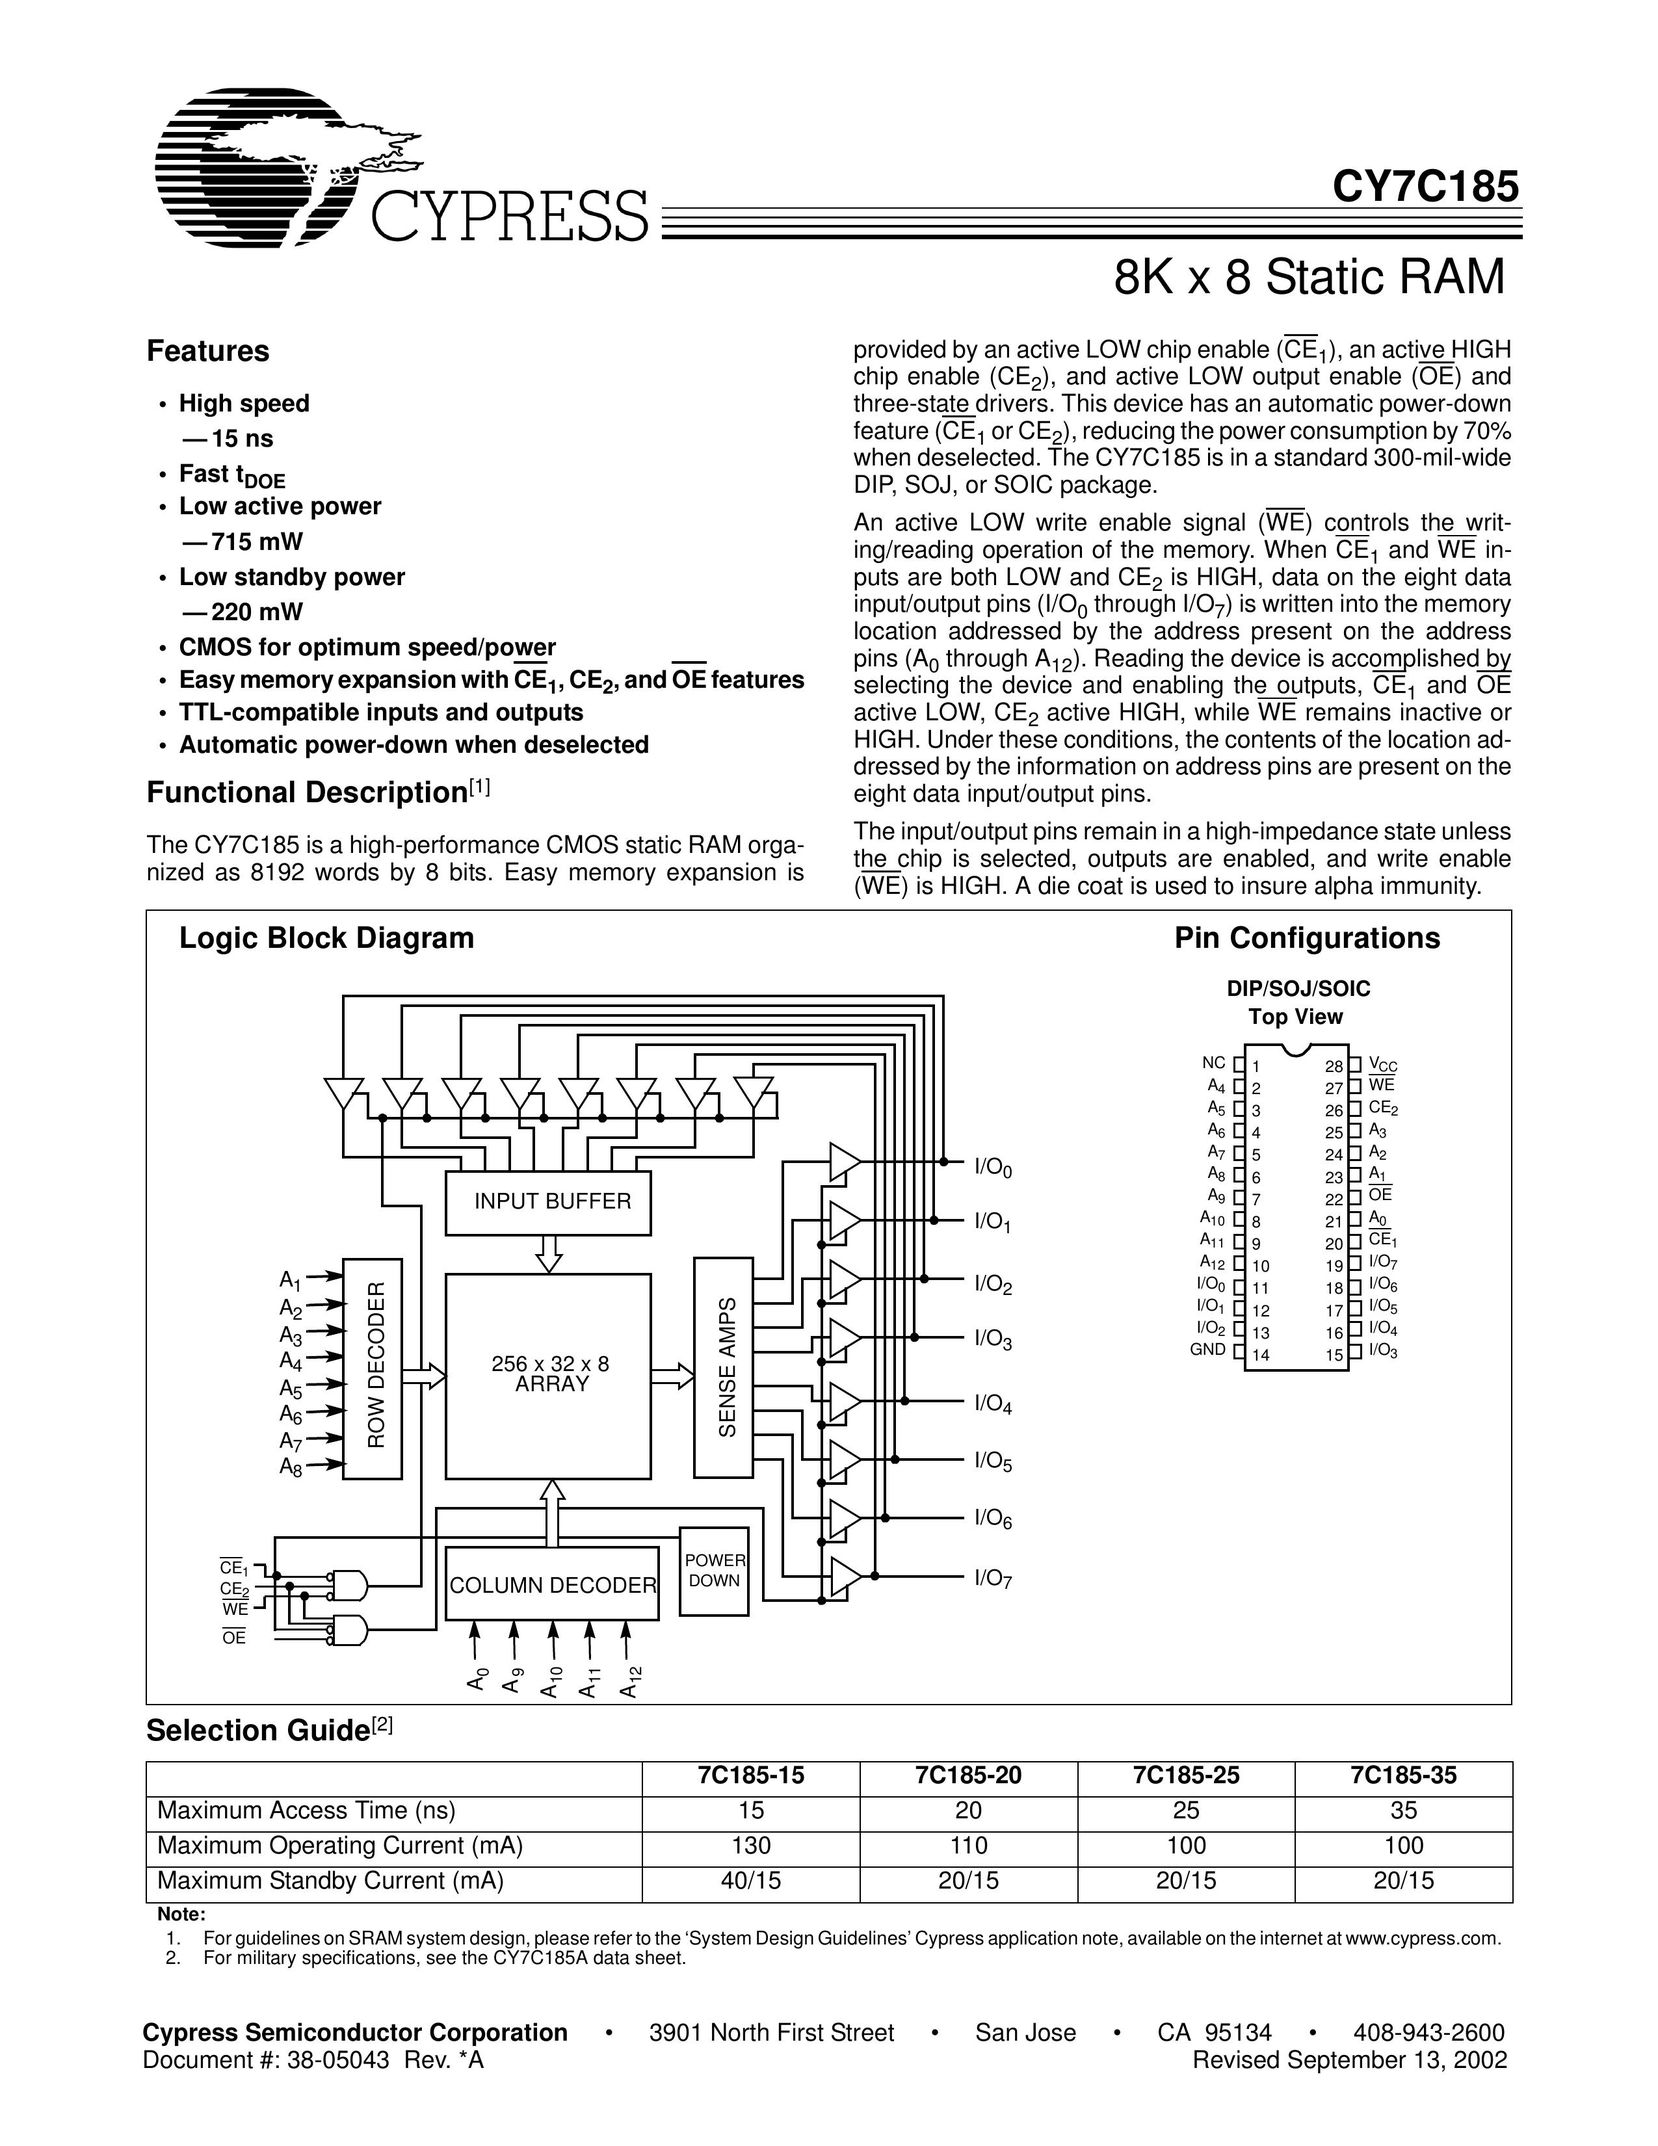 Cypress 7C185-15 Computer Hardware User Manual